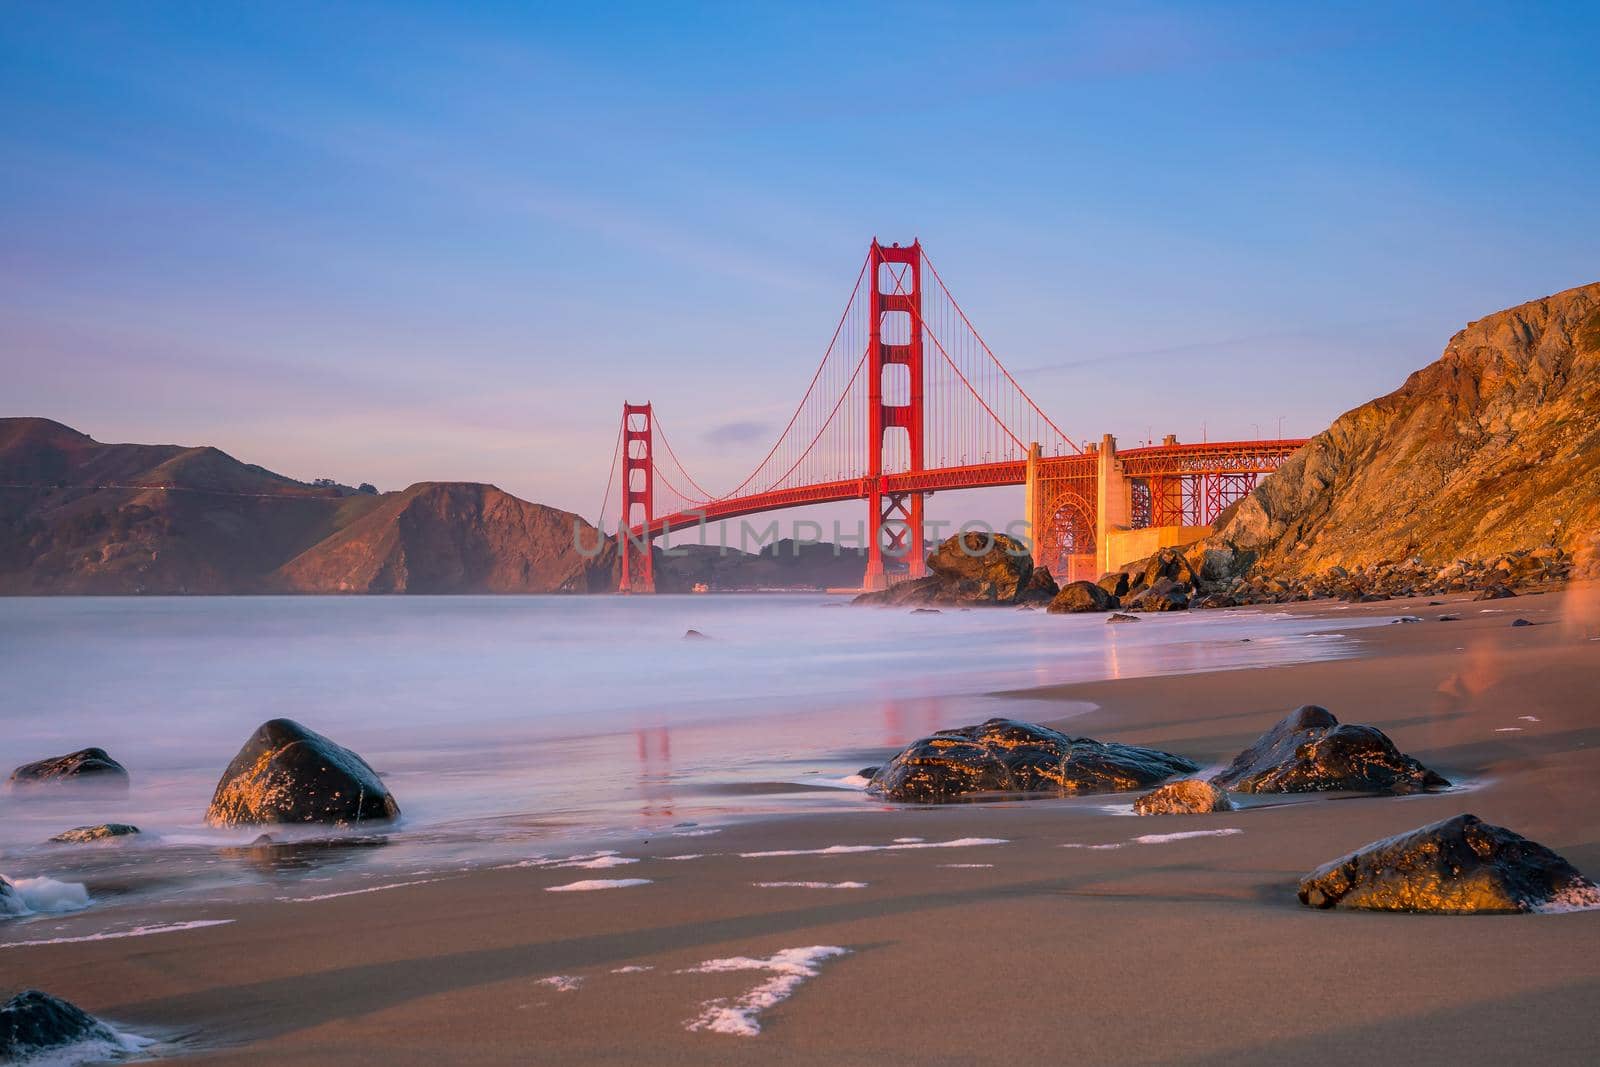 Golden Gate Bridge in San Francisco, California at sunset.